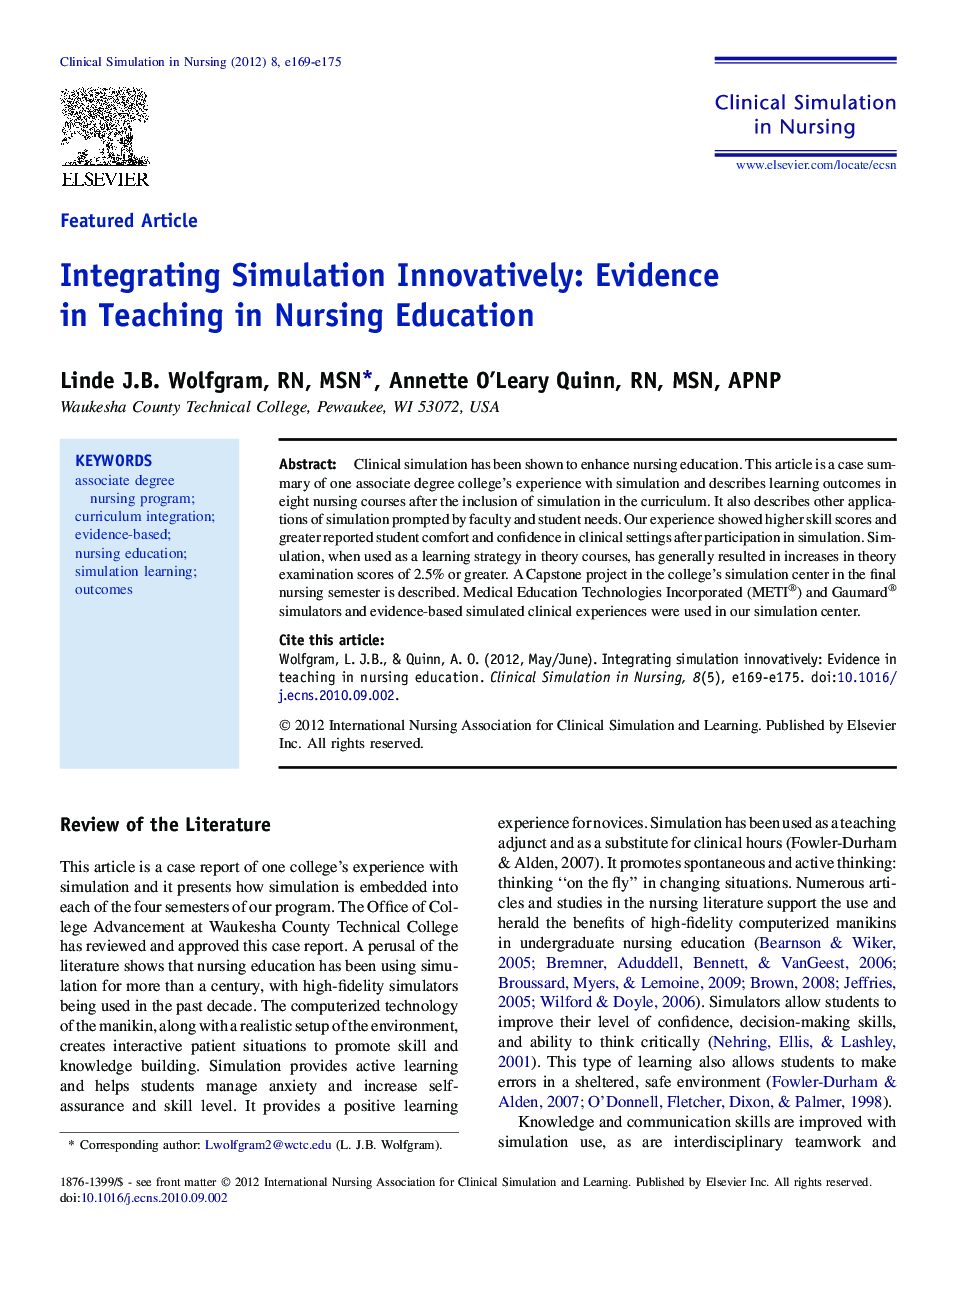 Integrating Simulation Innovatively: Evidence in Teaching in Nursing Education